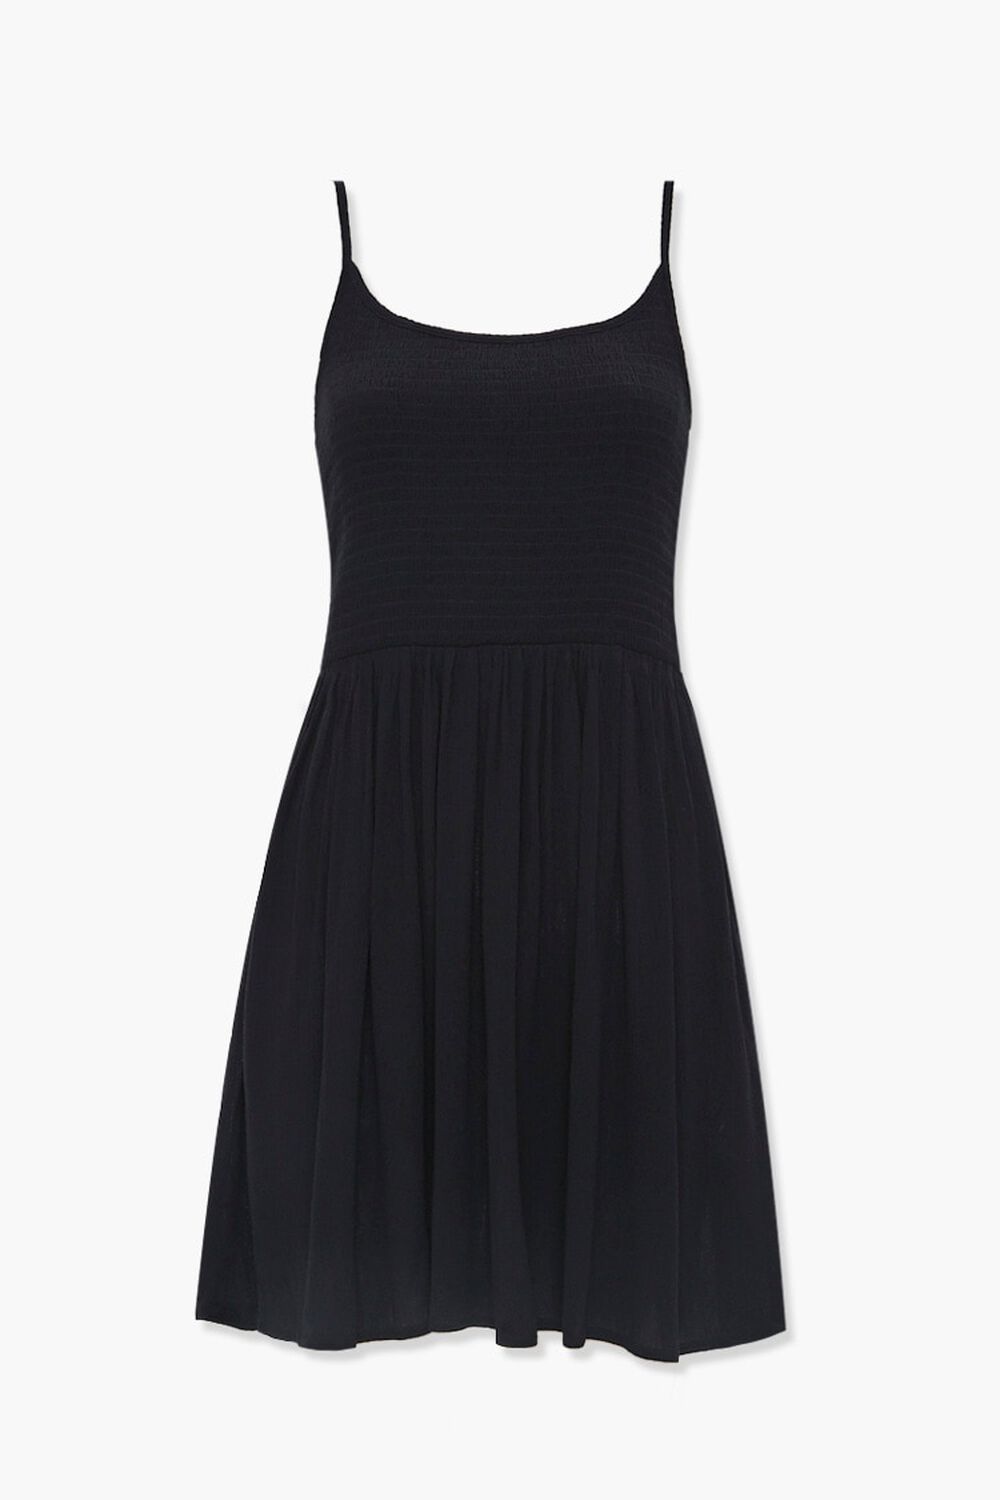 BLACK Smocked Skater Dress, image 1